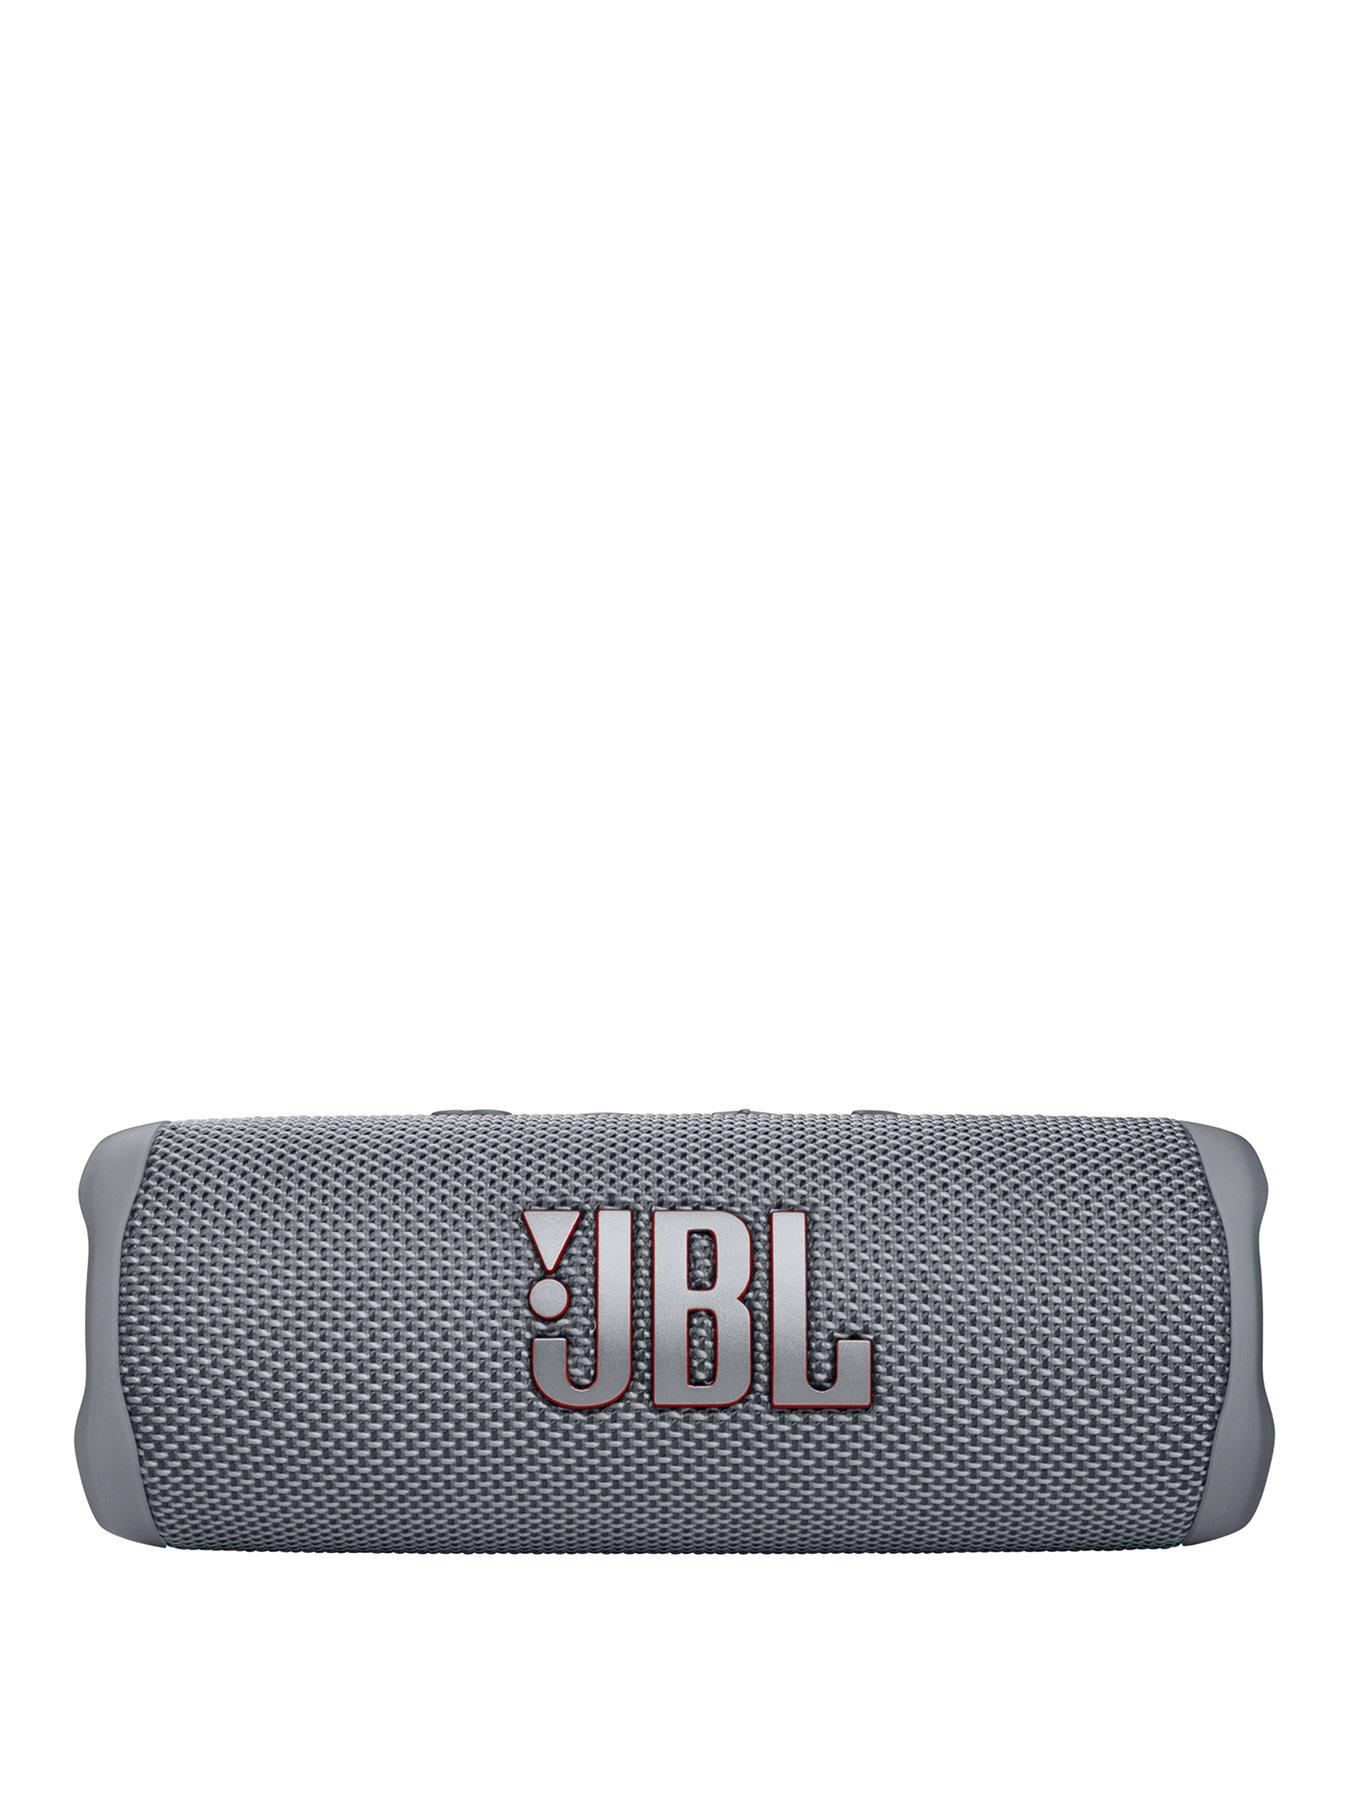 Enceinte JBL Partybox 310 Return in 14 days 